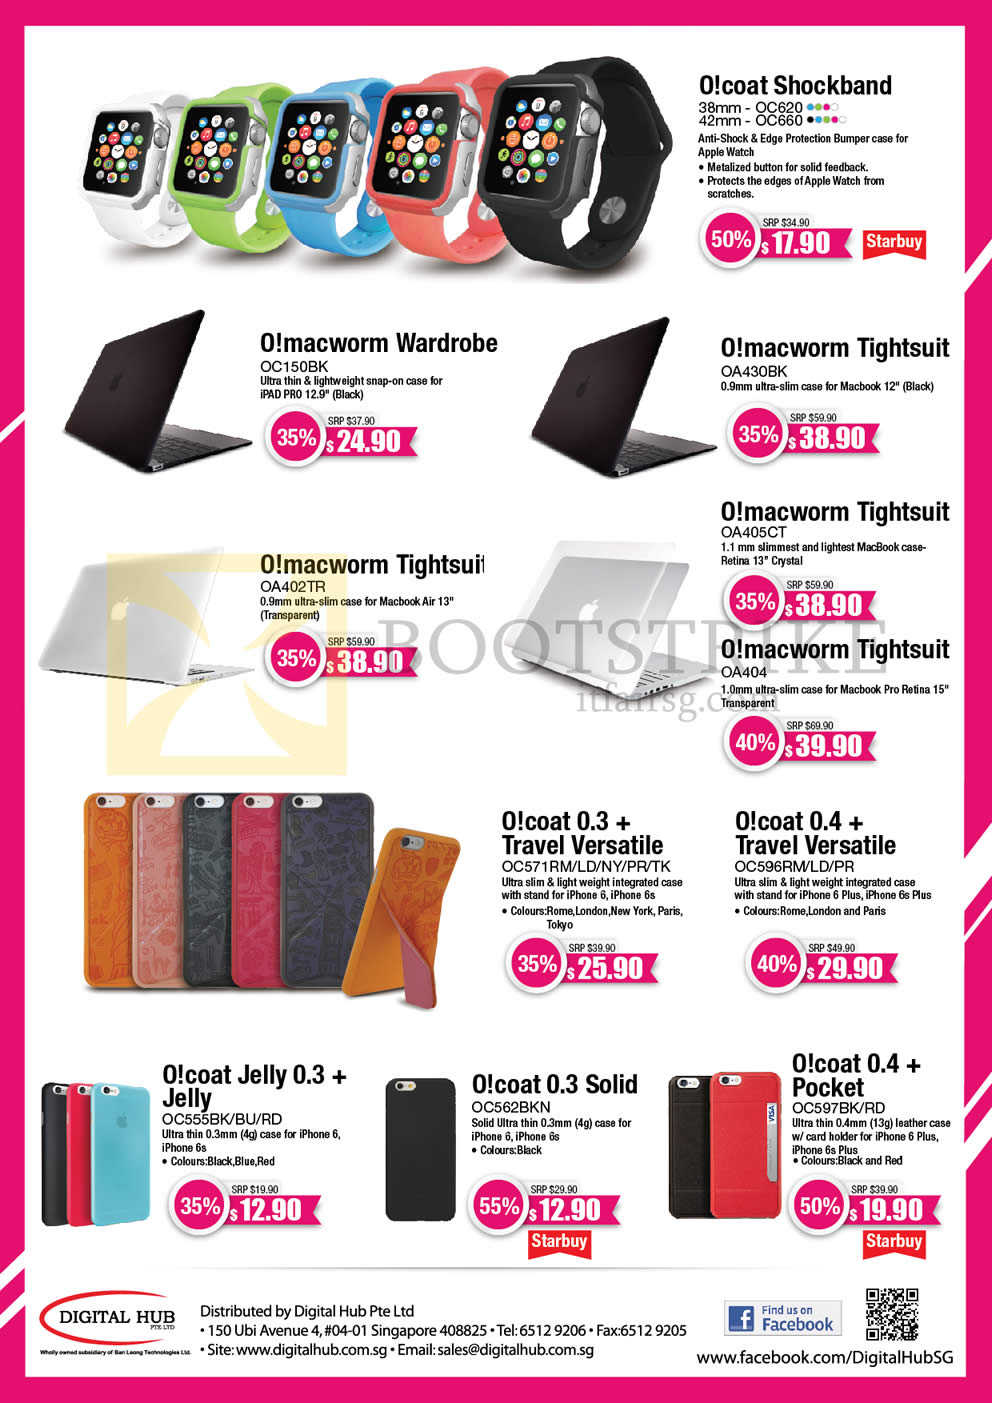 PC SHOW 2016 price list image brochure of Nubox Ozaki Accessories, Cases, Shockband, Wardrobe, Apple Watch, IPad Pro, O Coat, O Macworm